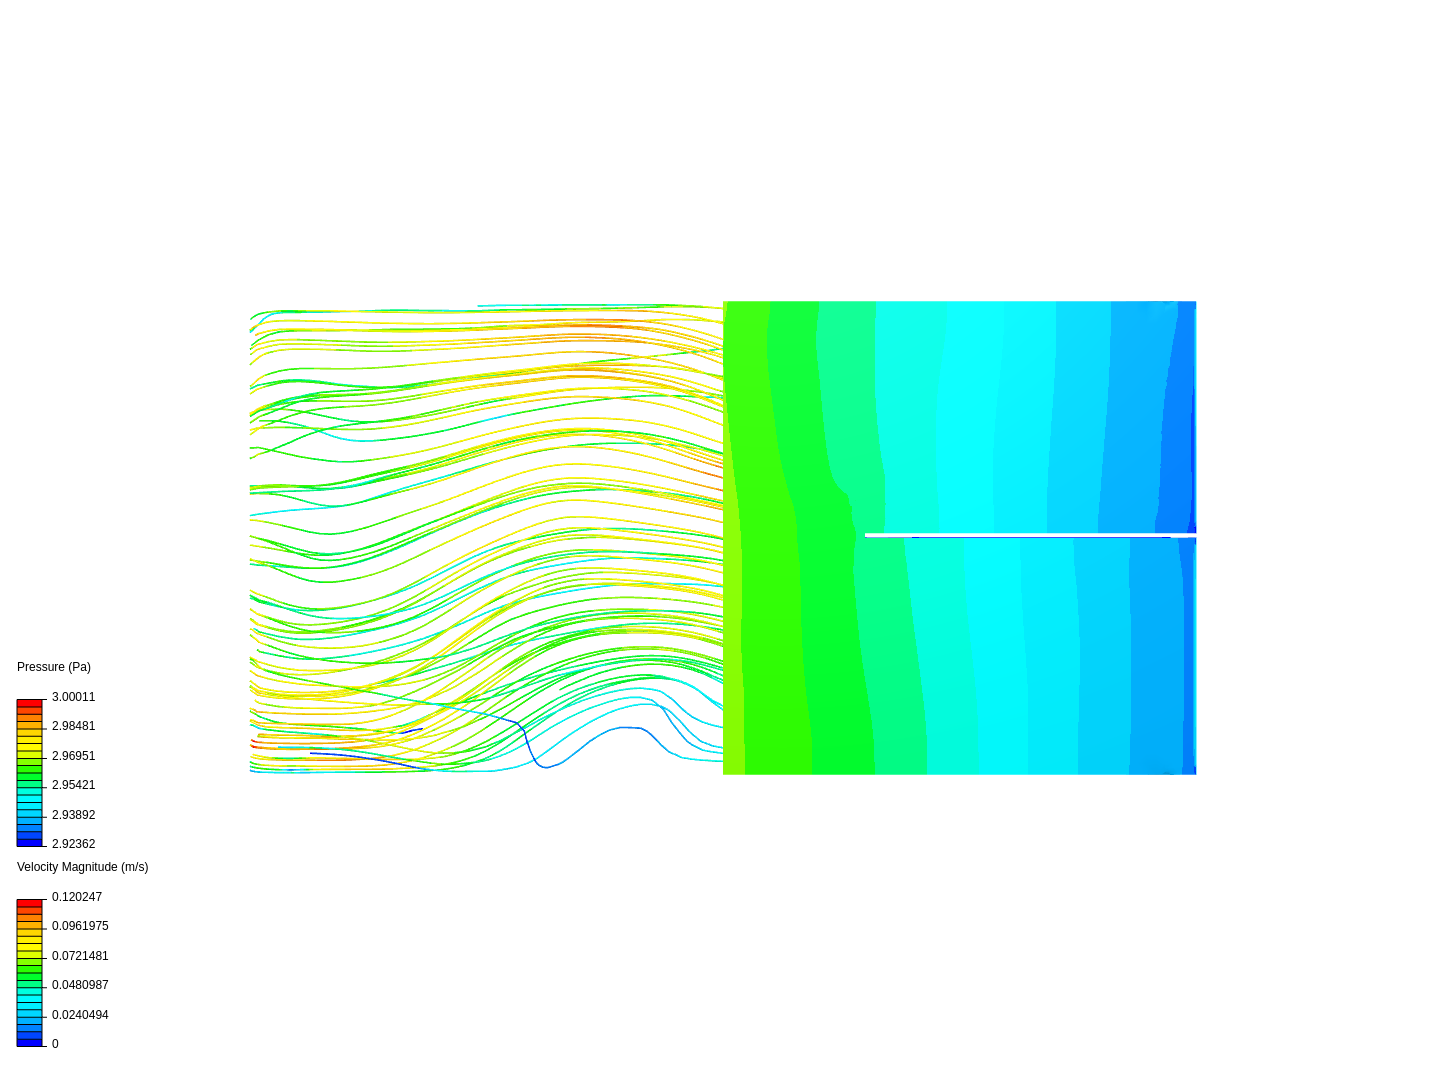 laminar flow pass through a flat plate image